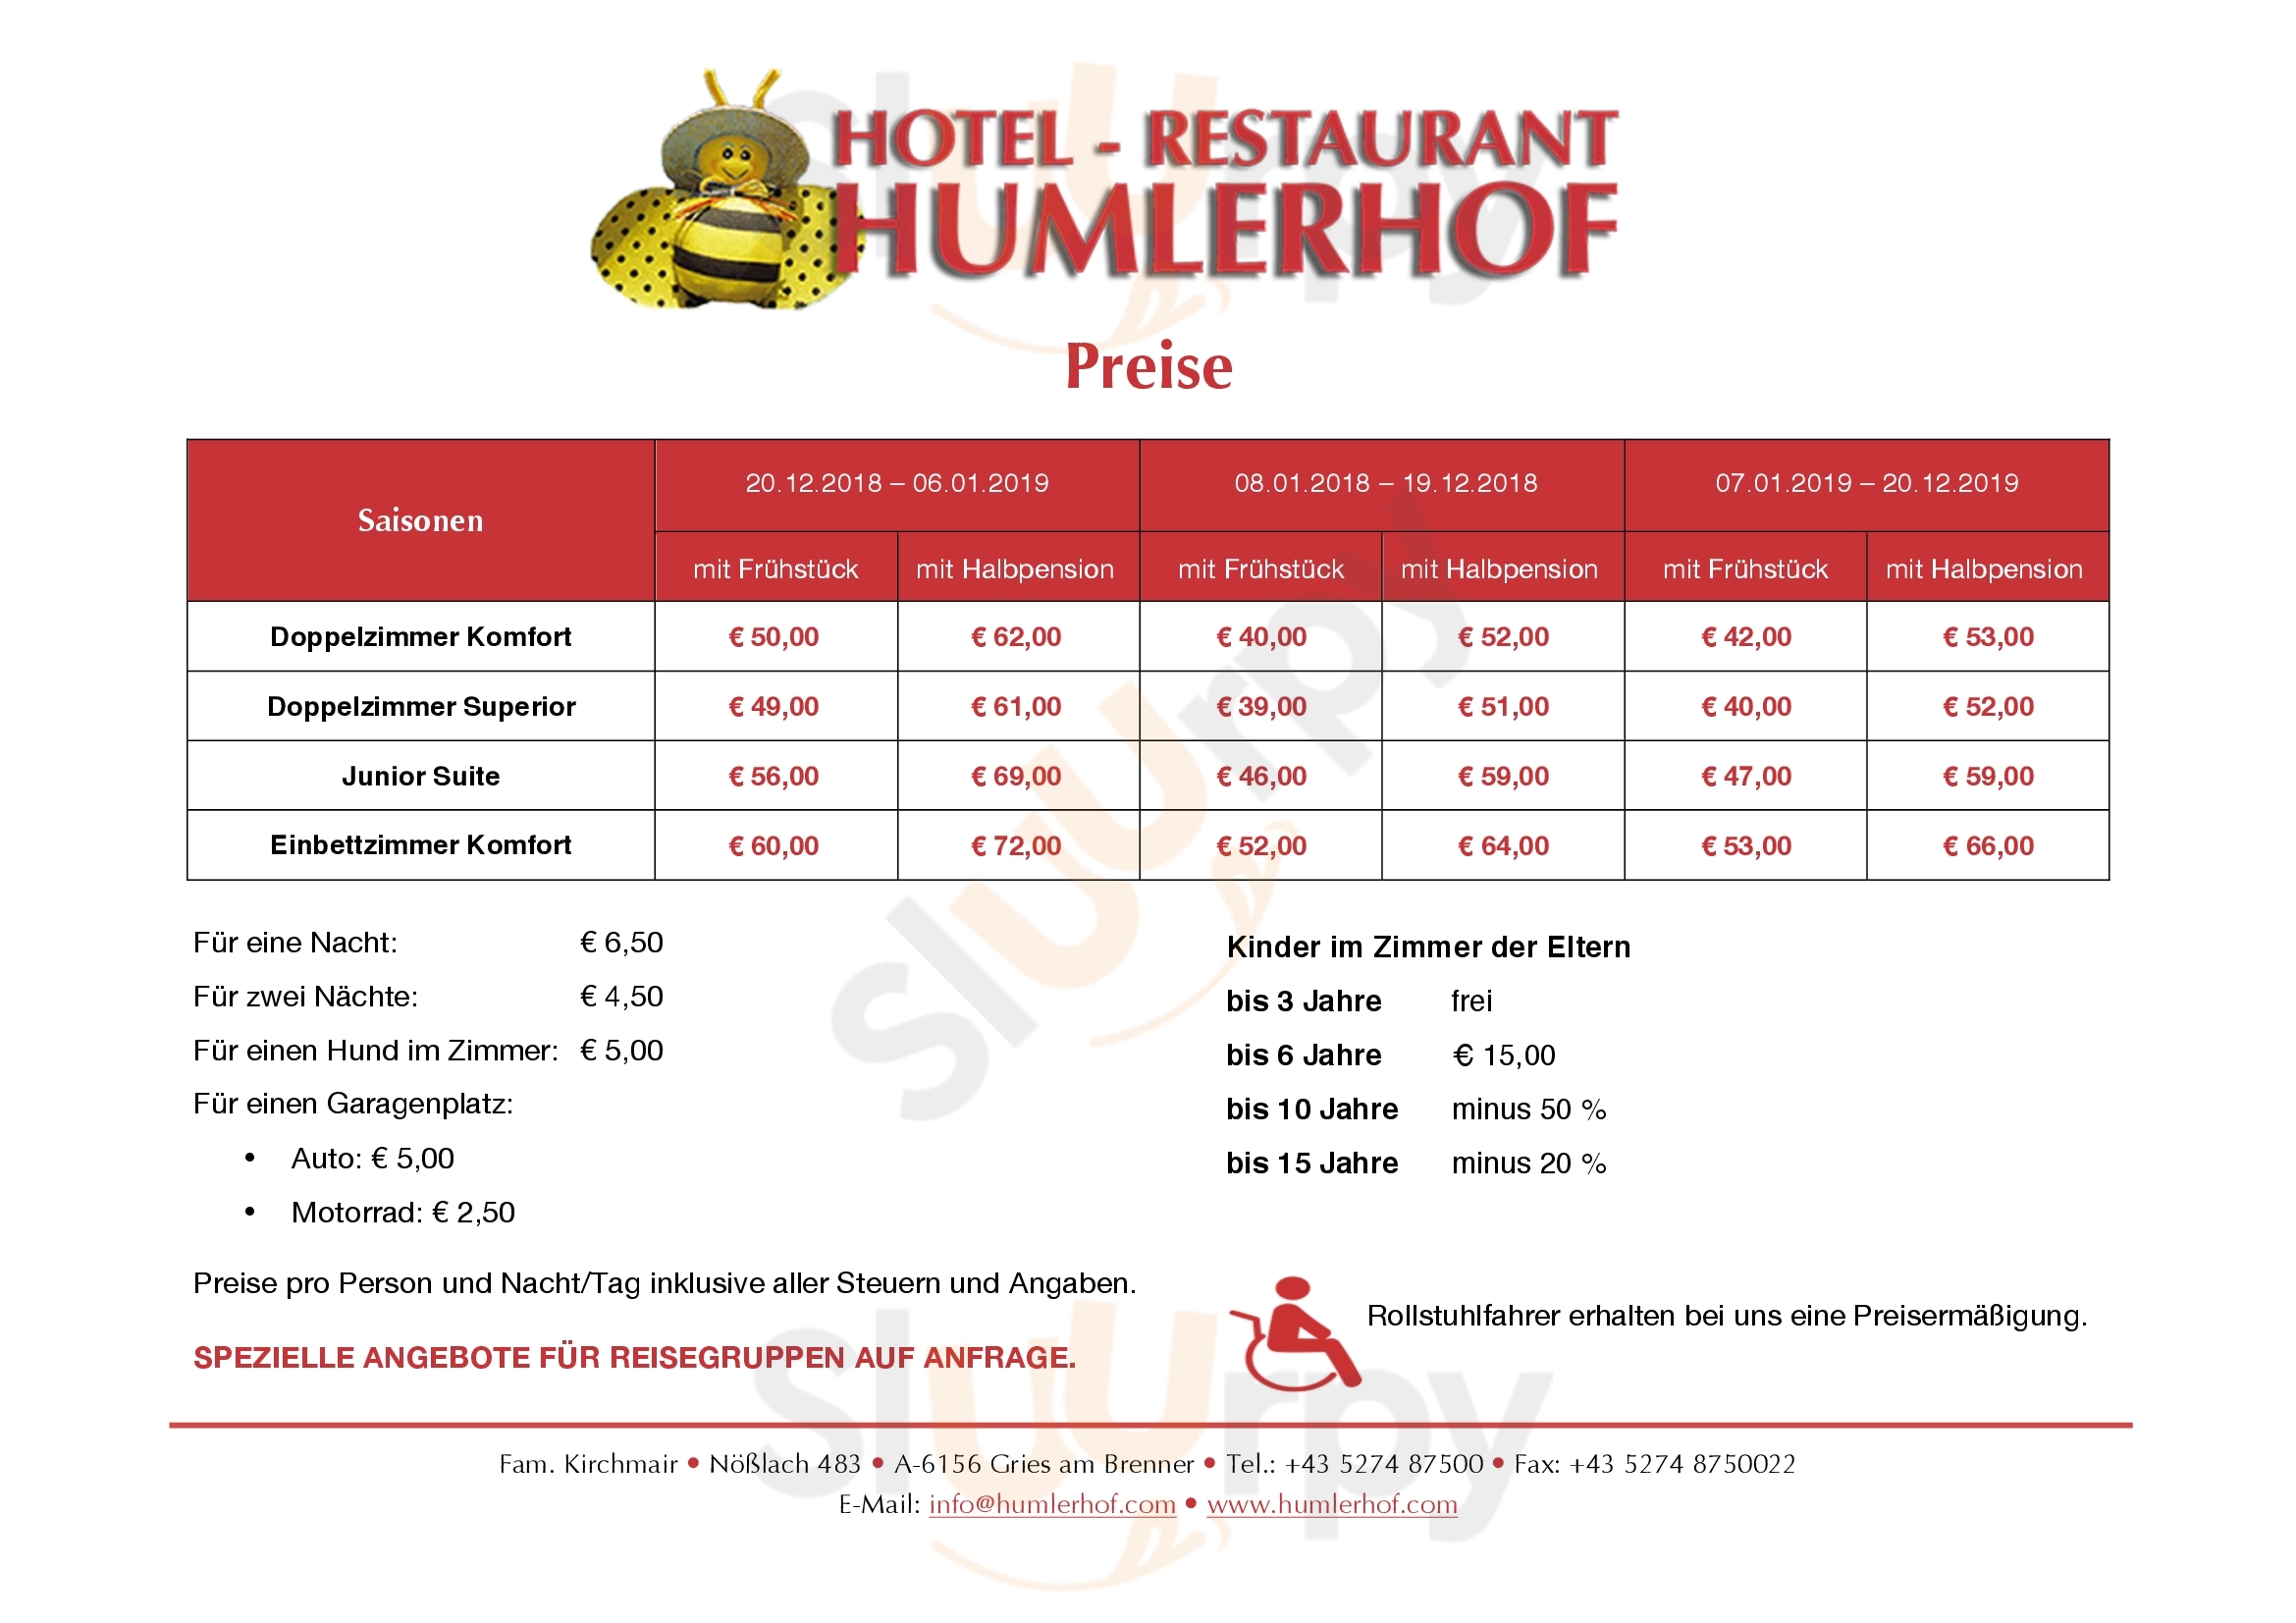 Hotel Restaurant Humlerhof Gries am Brenner Menu - 1